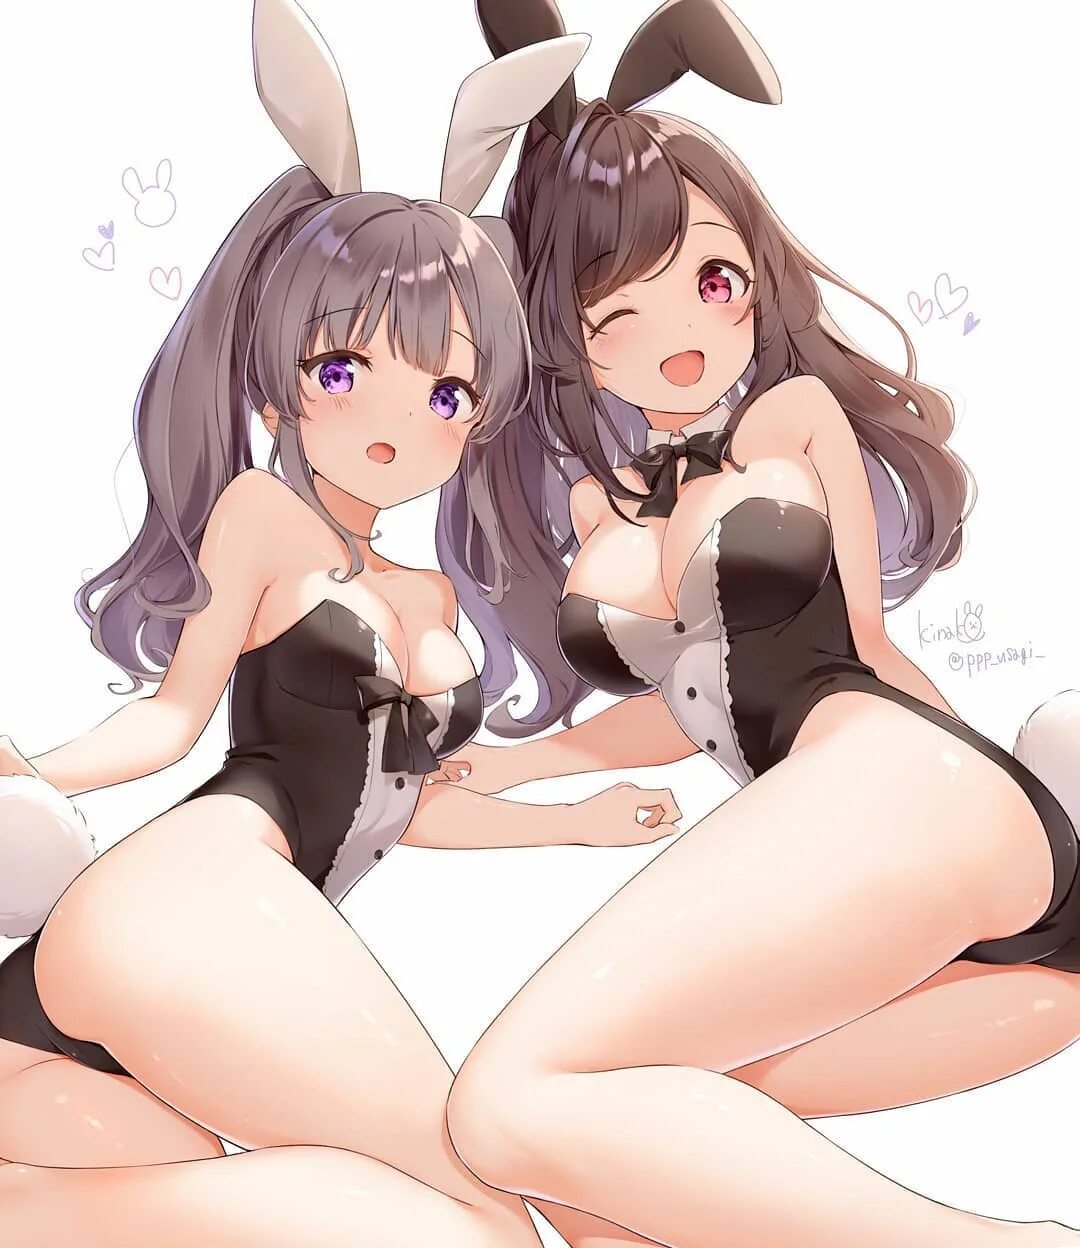 hot anime girl 🤤 🔥 в Instagram: "Bunnies 😍" .